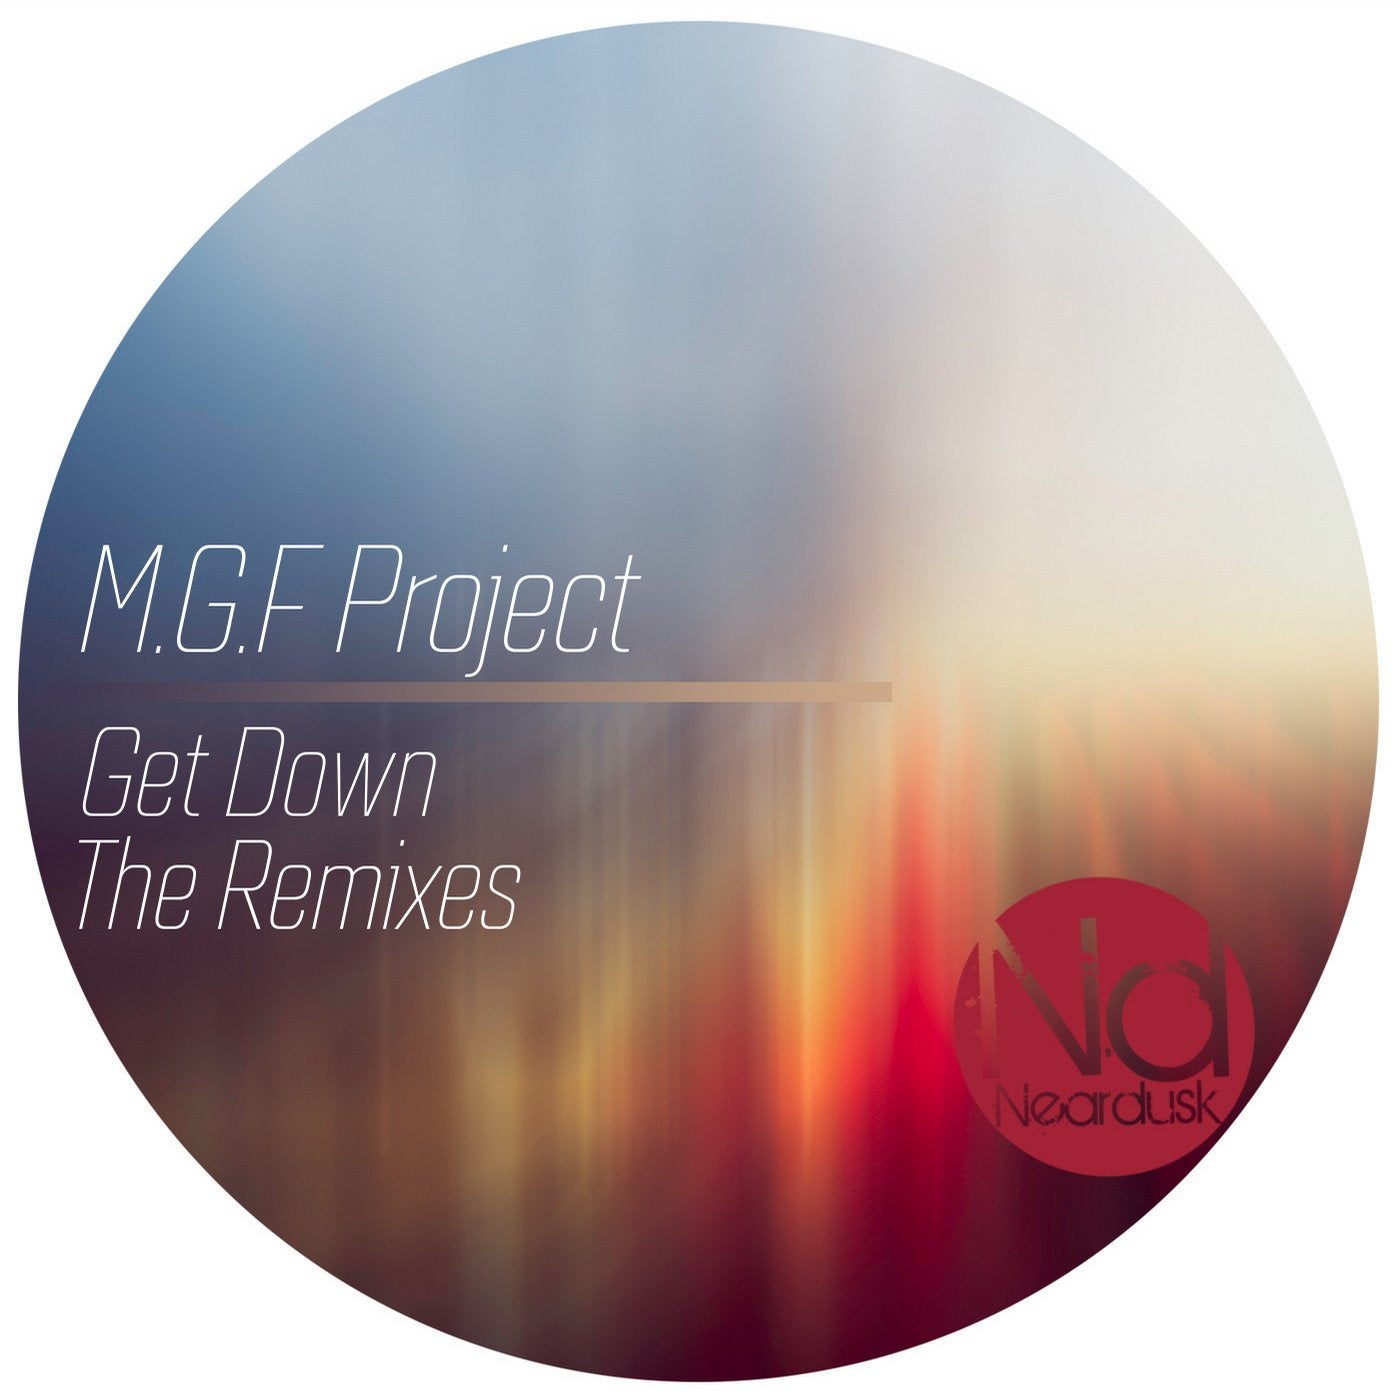 Get Down [The Remixes]